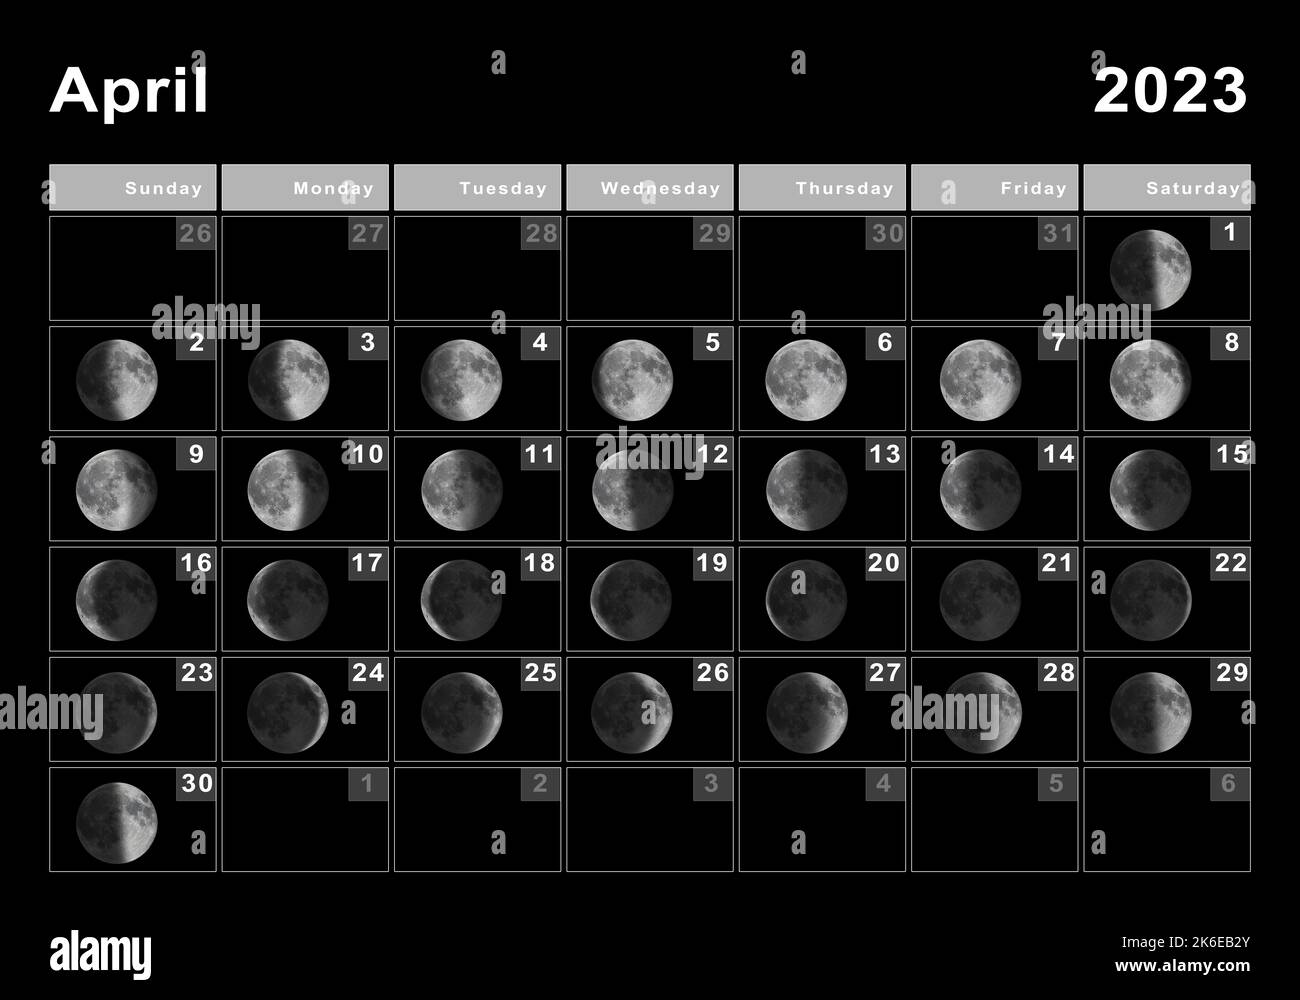 april-2023-lunar-calendar-moon-cycles-moon-phases-stock-photo-alamy